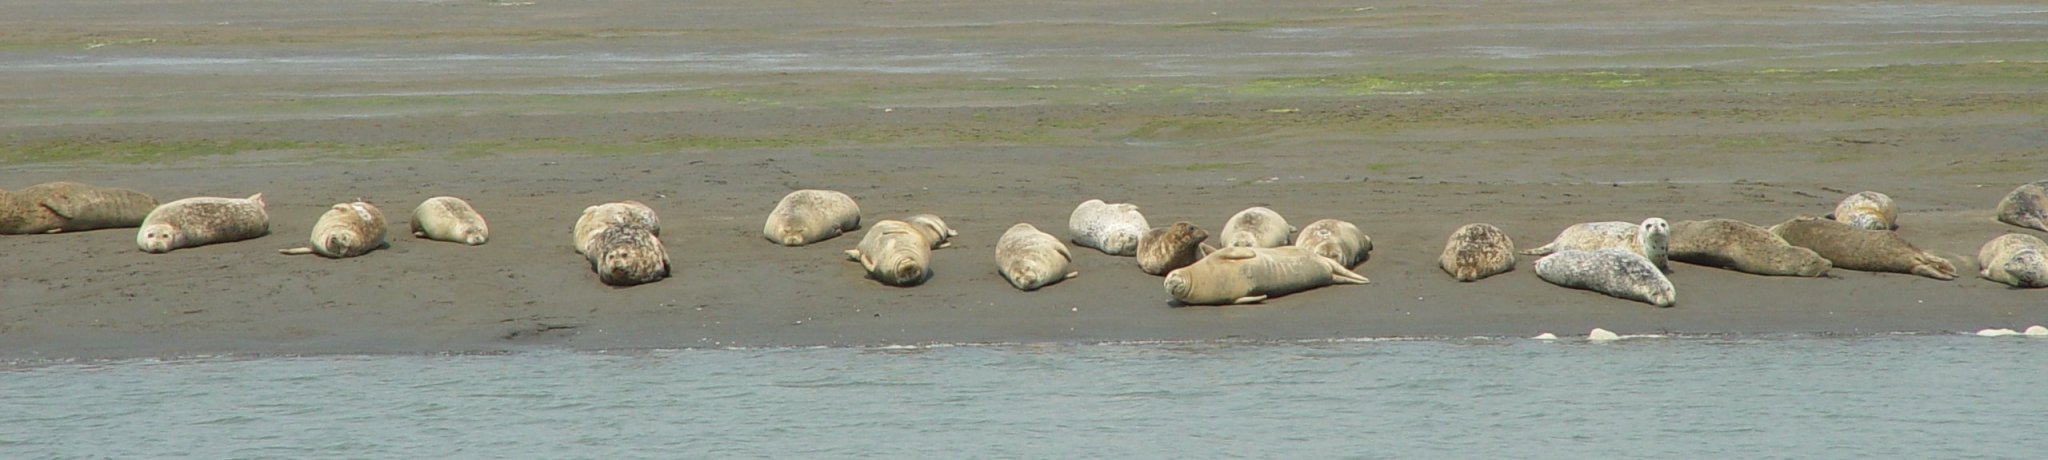 Seals on the beach (Phoca vitulina)